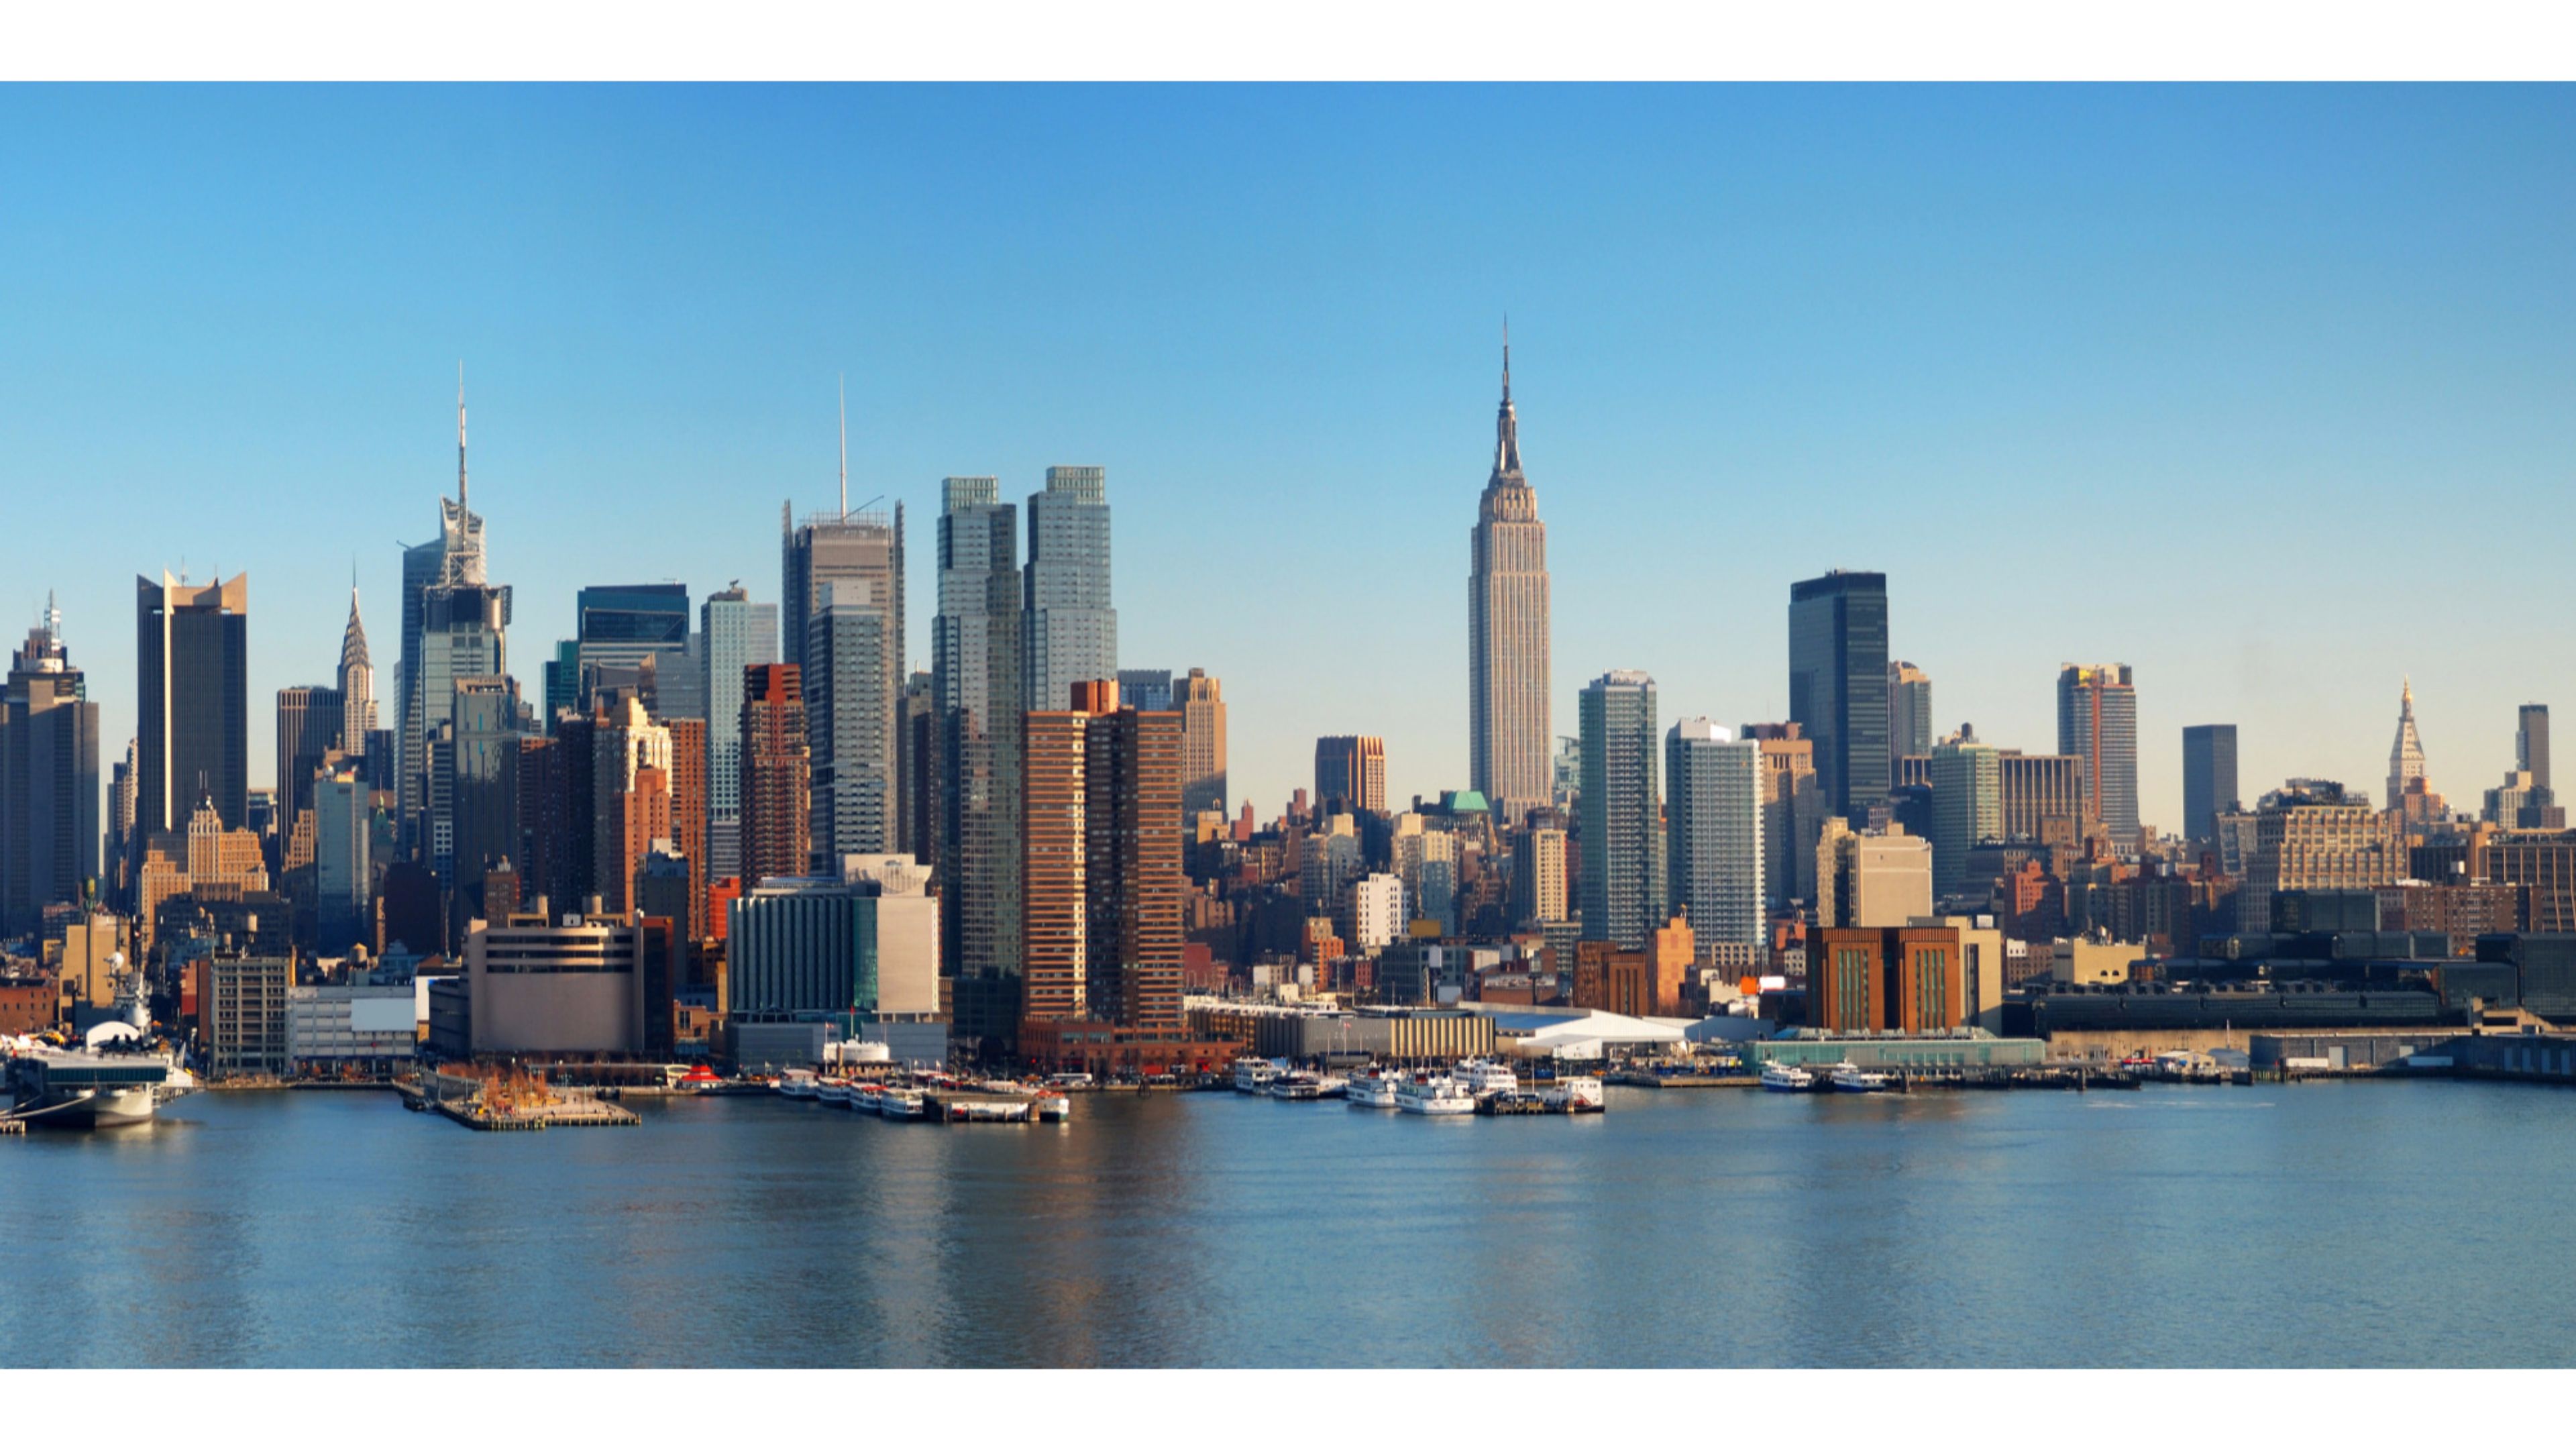 Download Free New York City 4K Wallpaper Free 4K Wallpaper